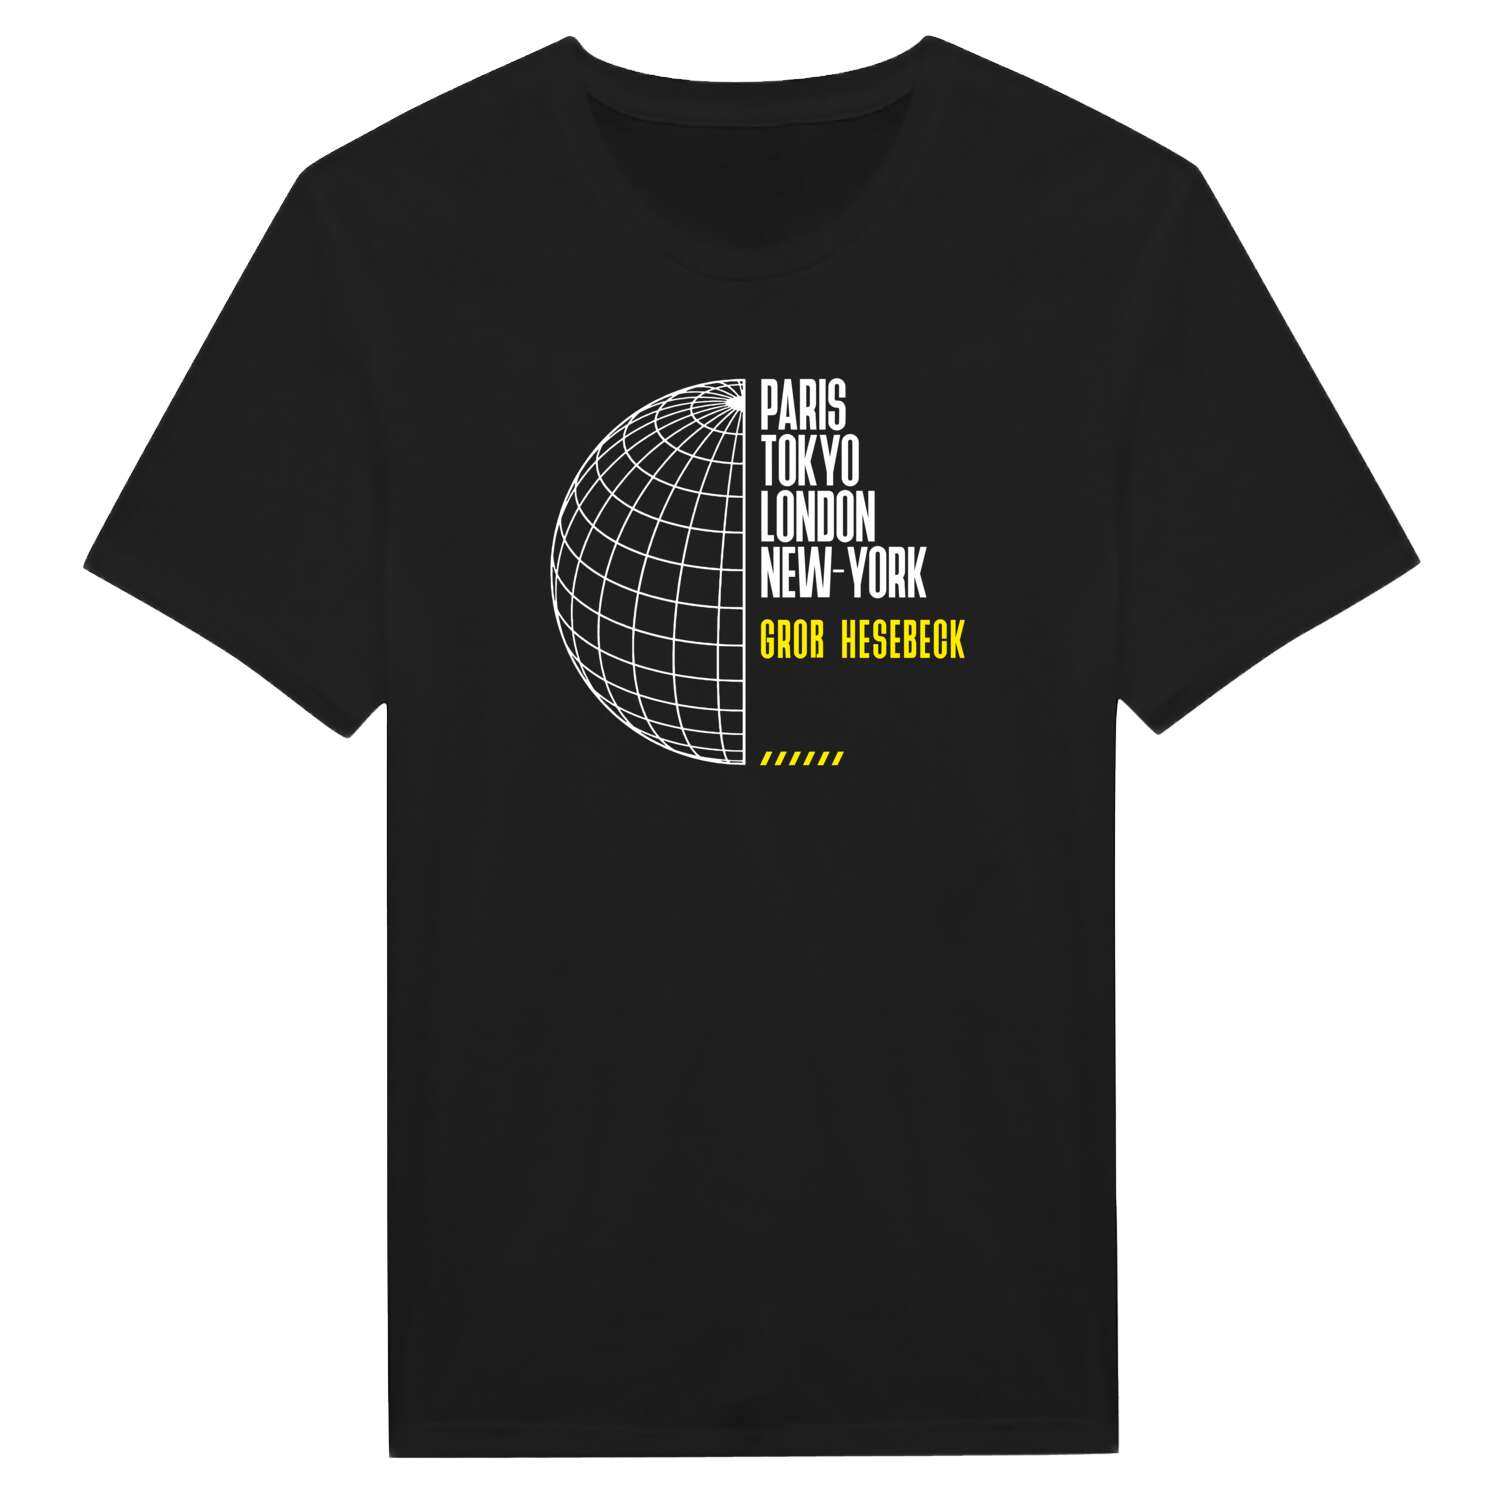 Groß Hesebeck T-Shirt »Paris Tokyo London«